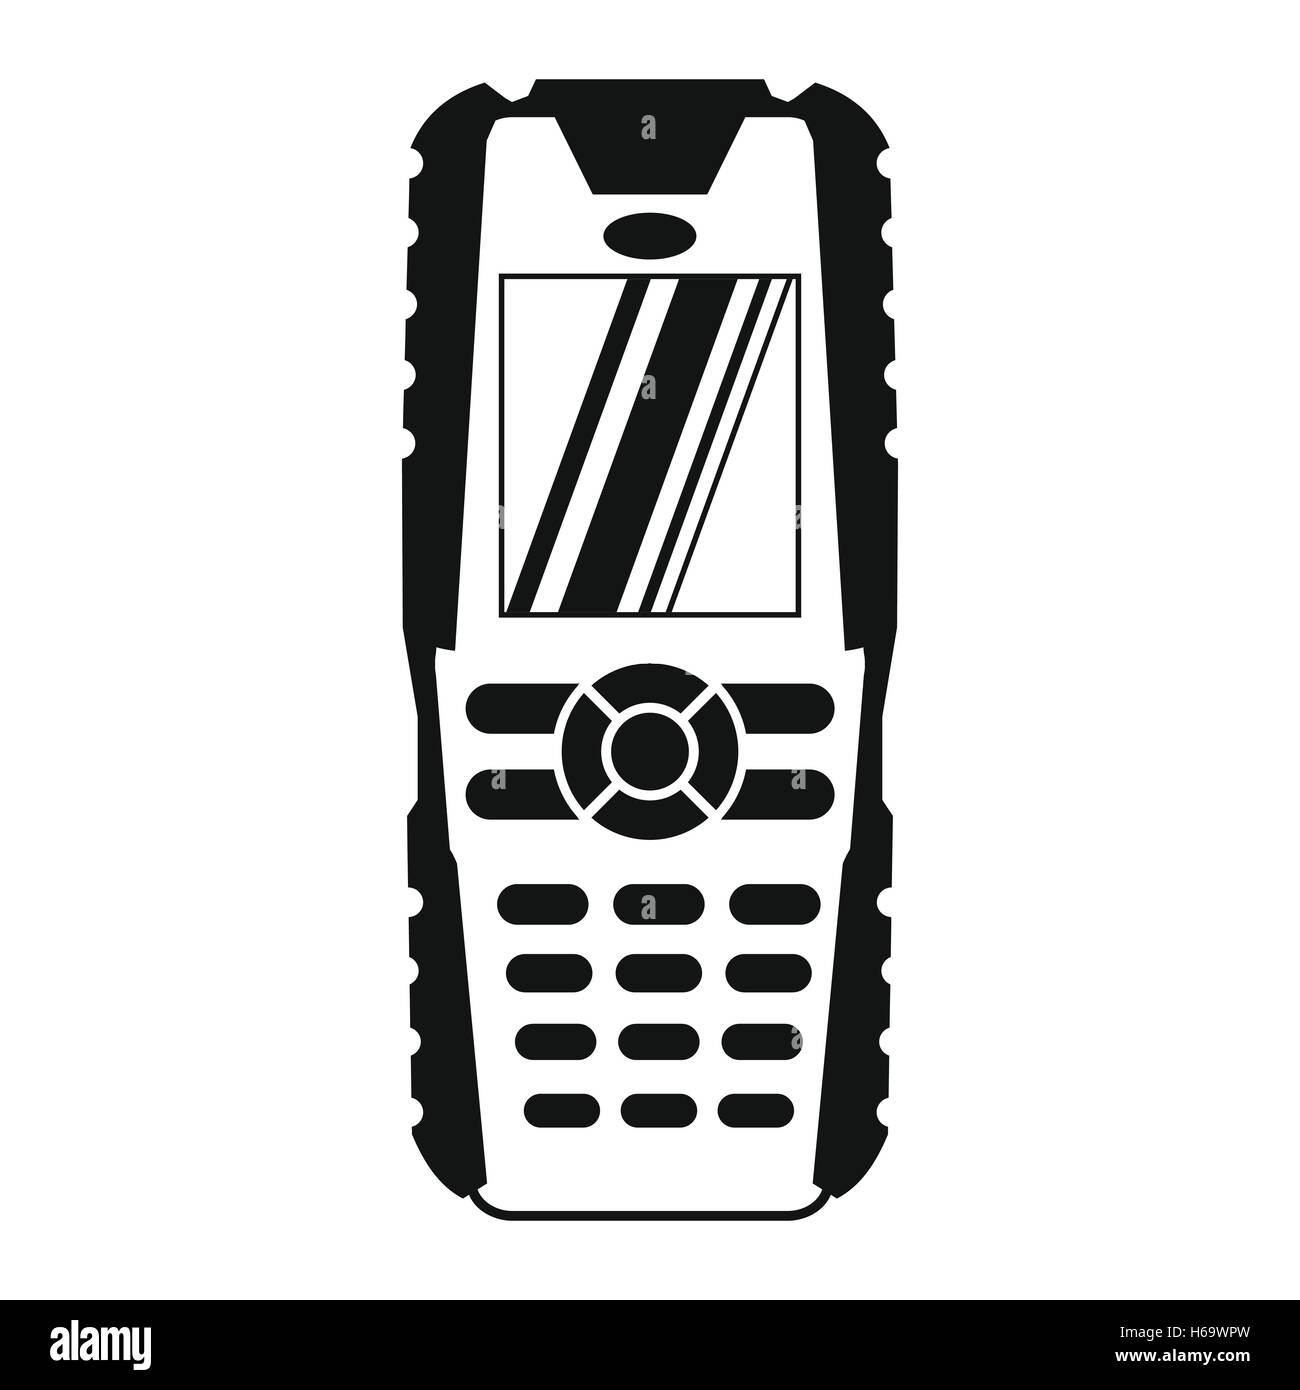 Einfaches Symbol Handy-schwarz Stock Vektor